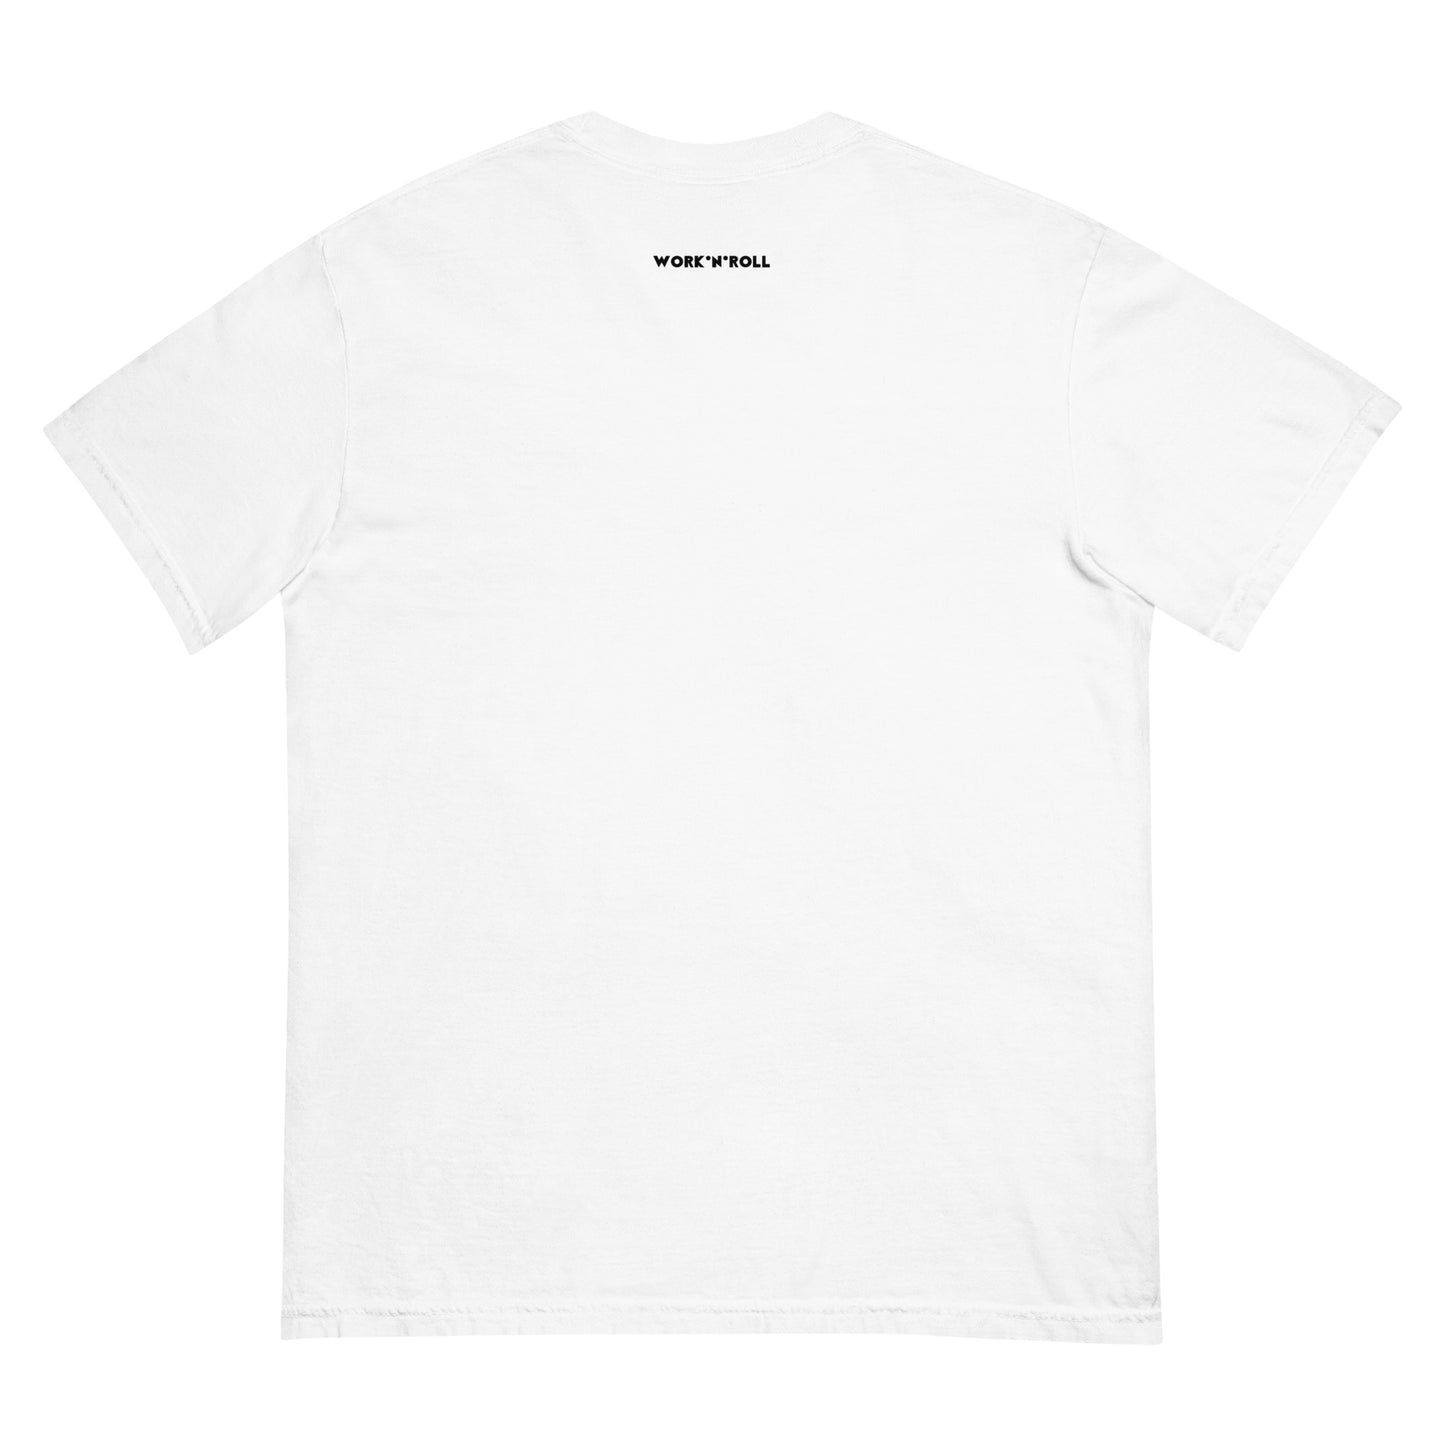 Heavyweight t-shirt "https://worknroll.nyc"